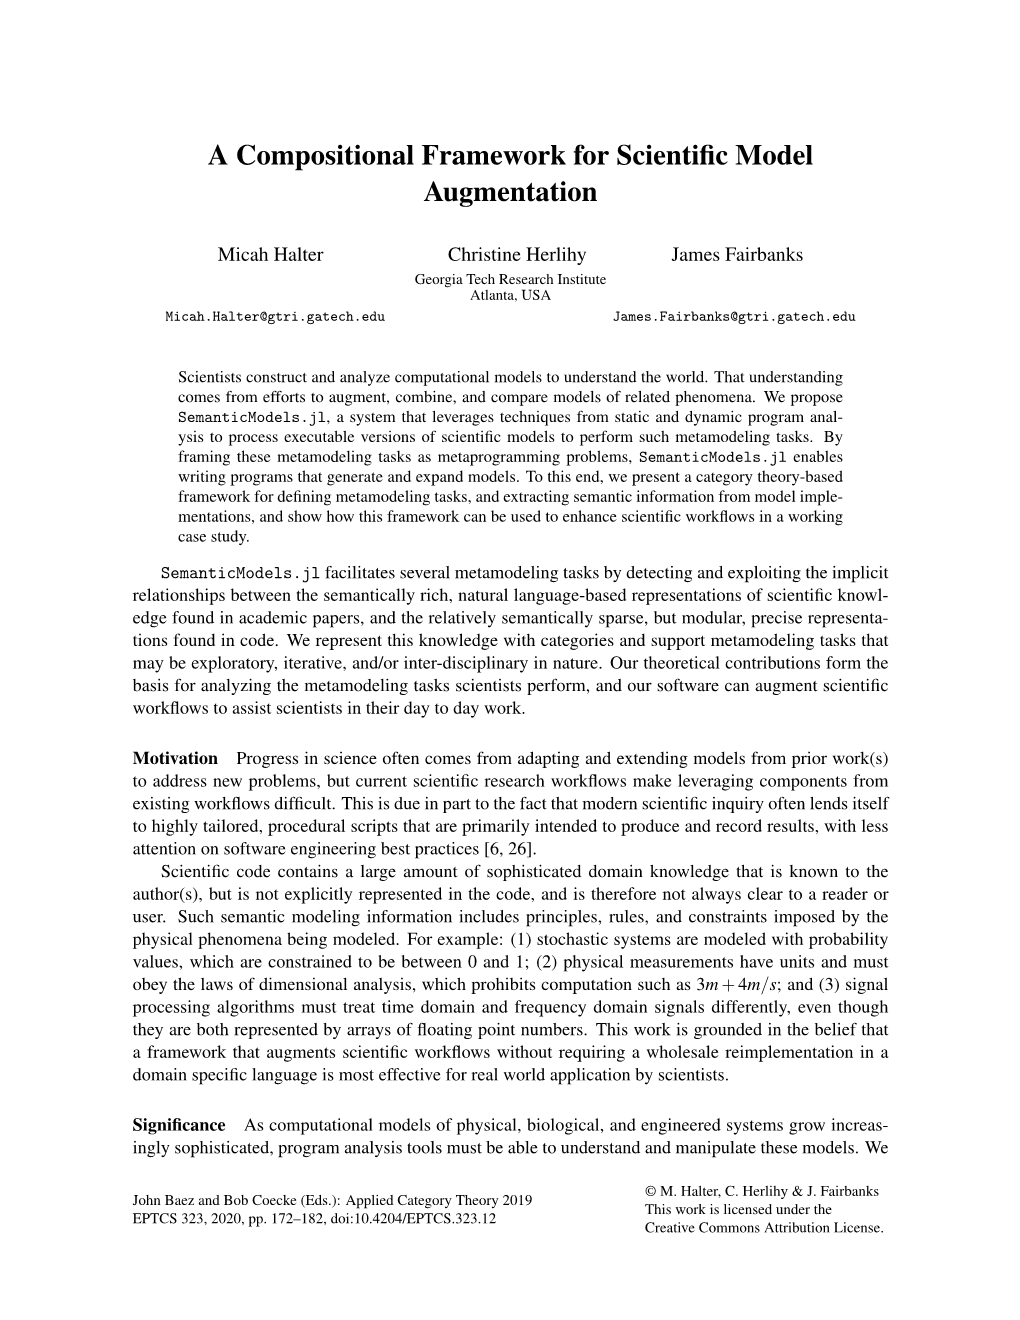 A Compositional Framework for Scientific Model Augmentation